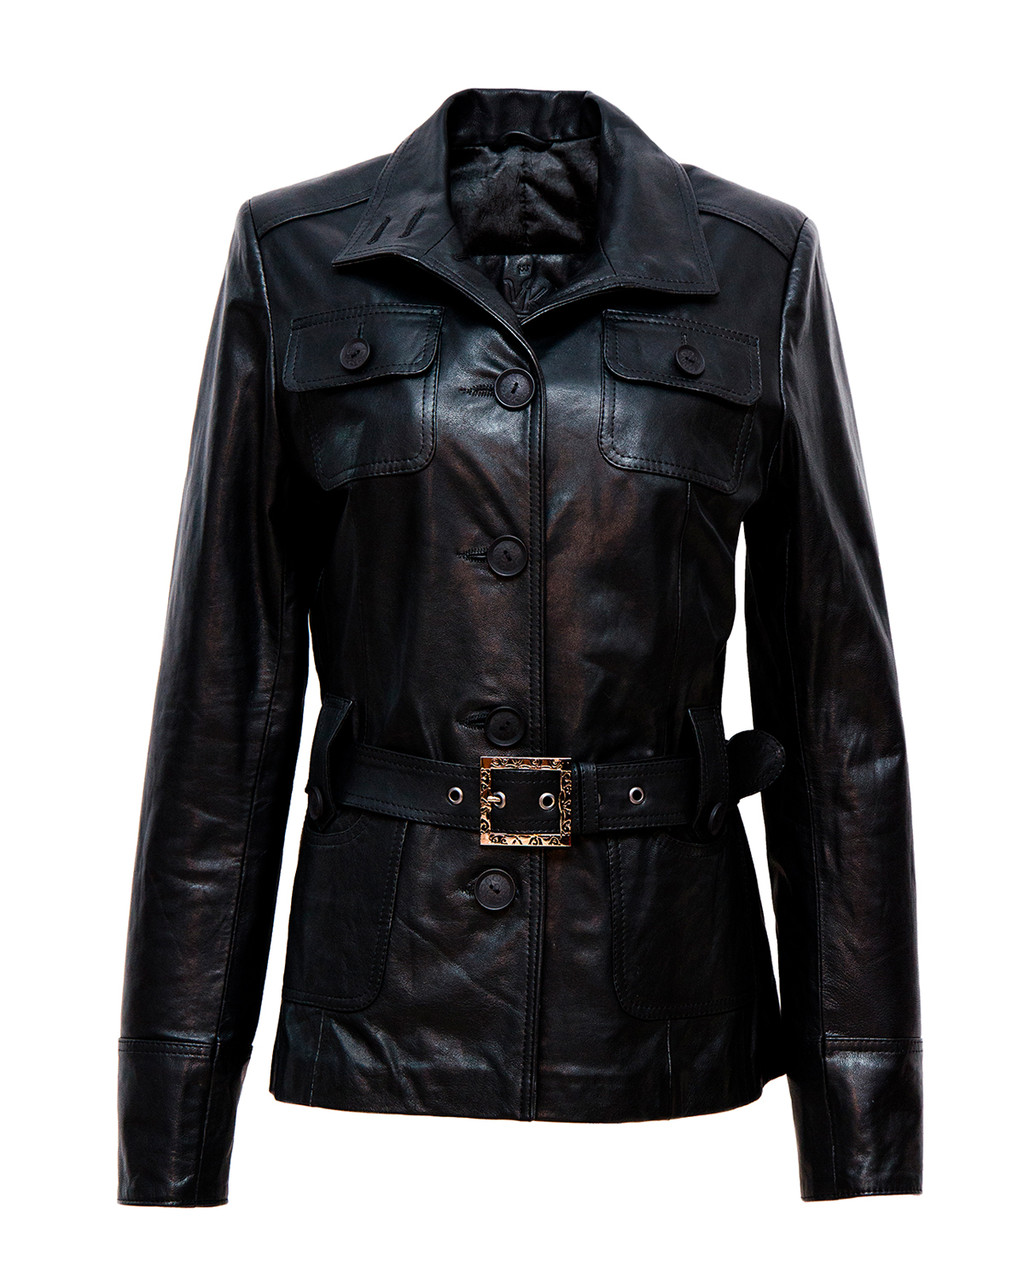 

Кожаная куртка на пуговицах черная женская (Арт. N201) 44 размера, Черный